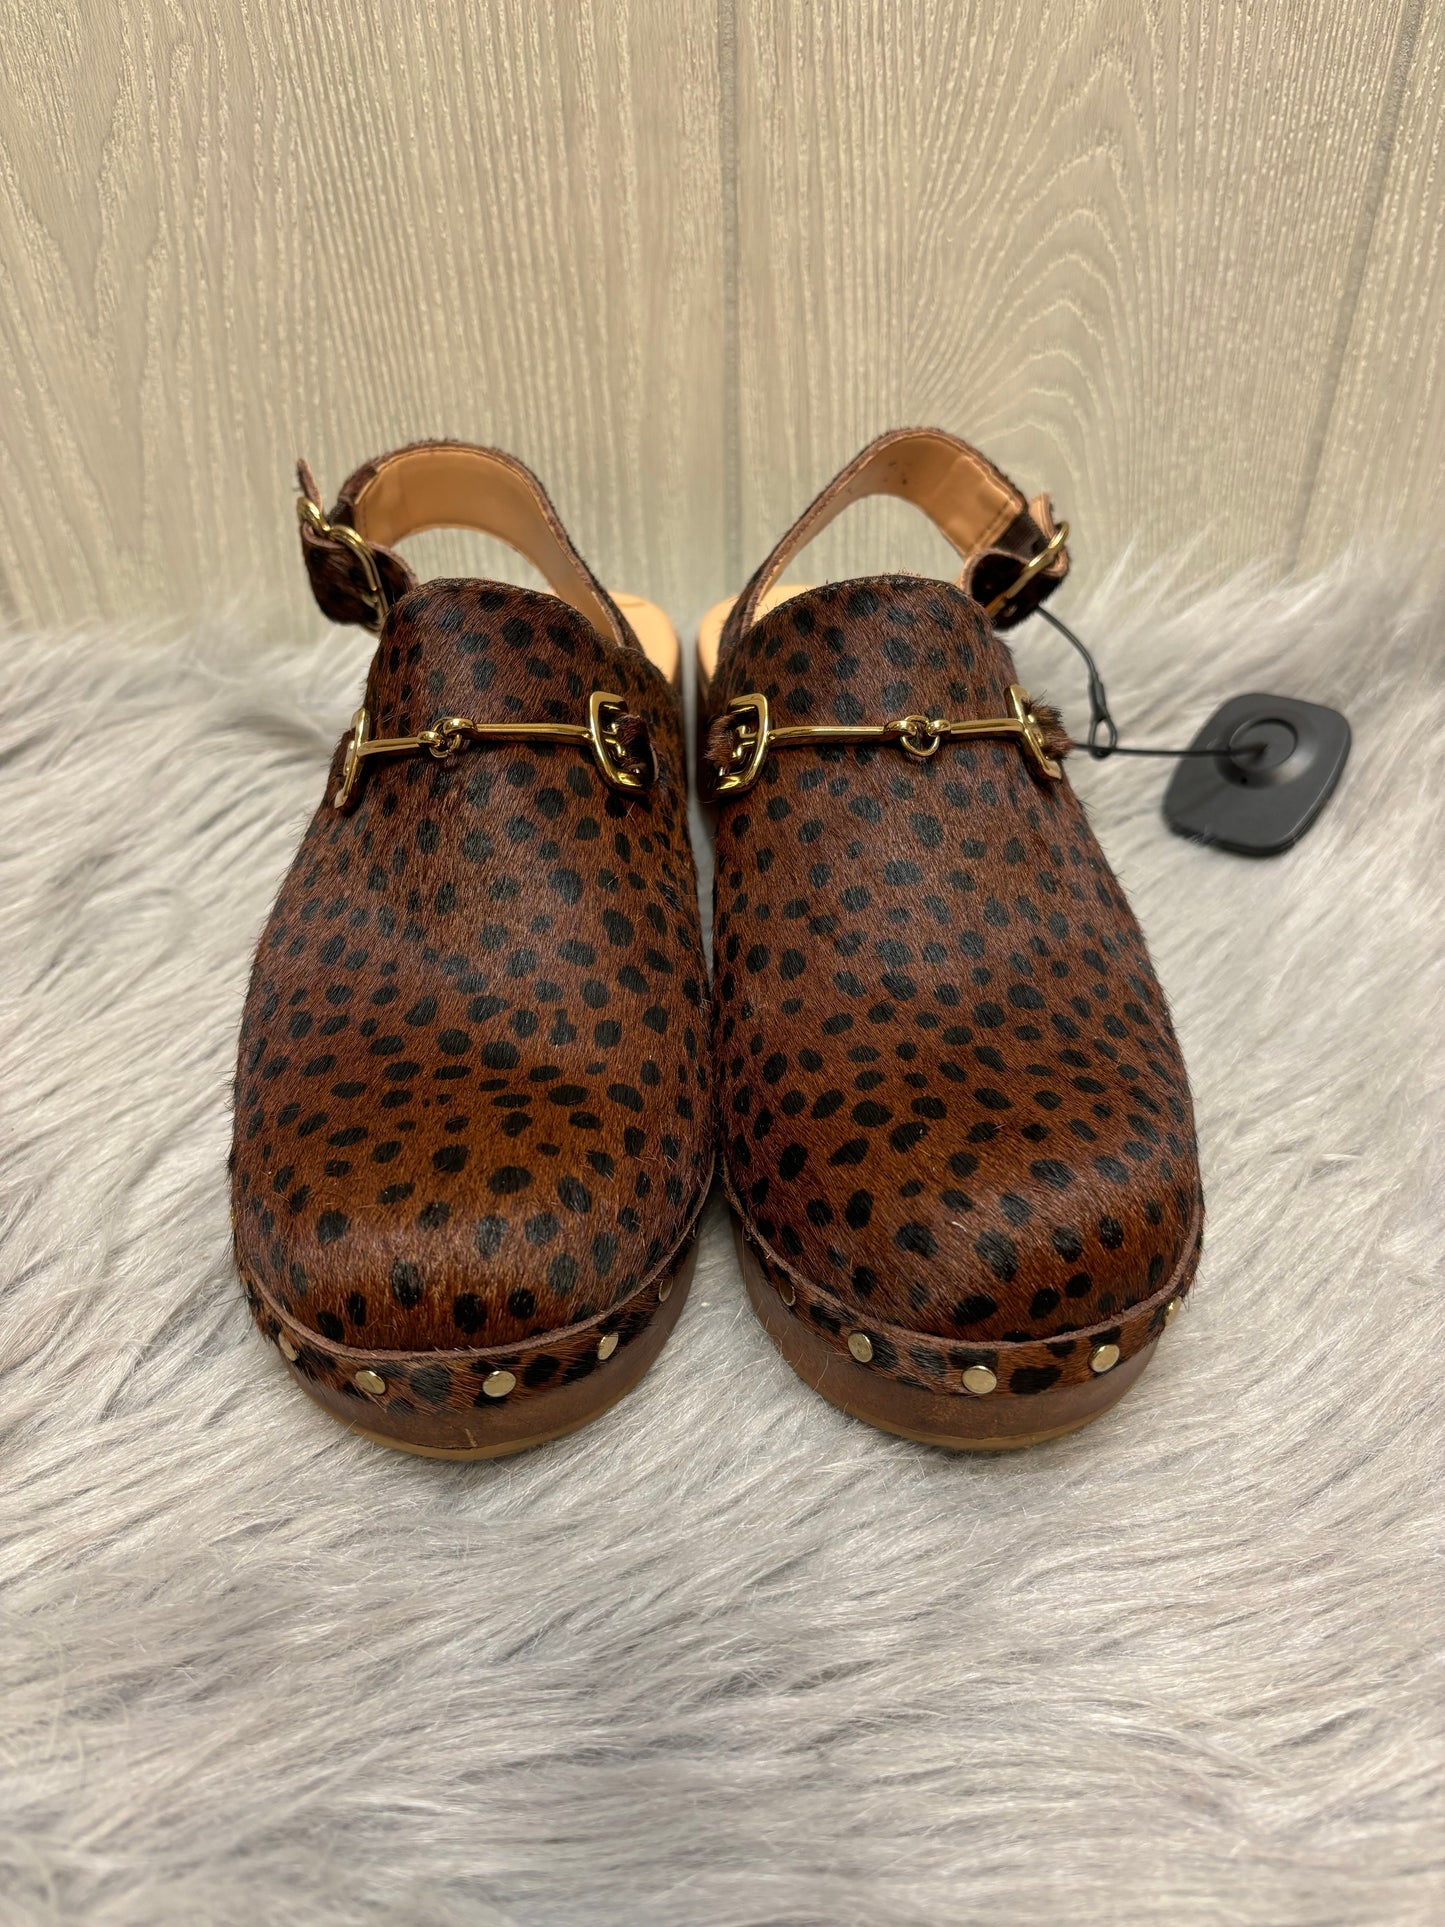 Animal Print Shoes Heels Wedge Sam Edelman, Size 8